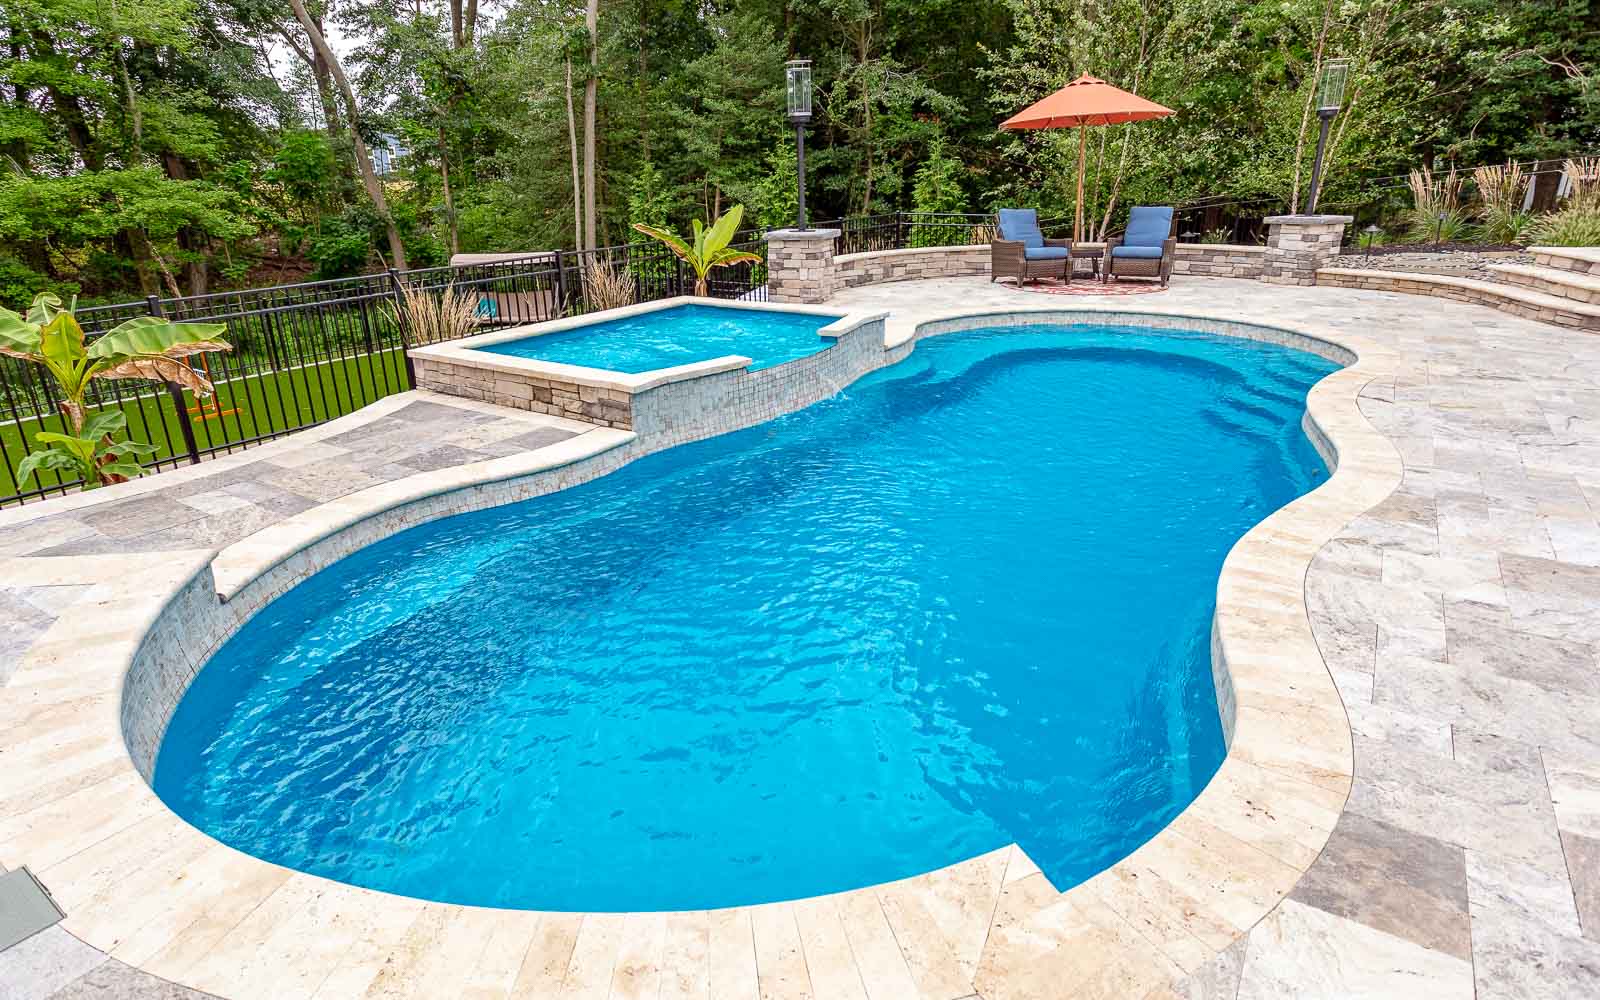 The Leisure Pools Riviera, a fiberglass inground pool